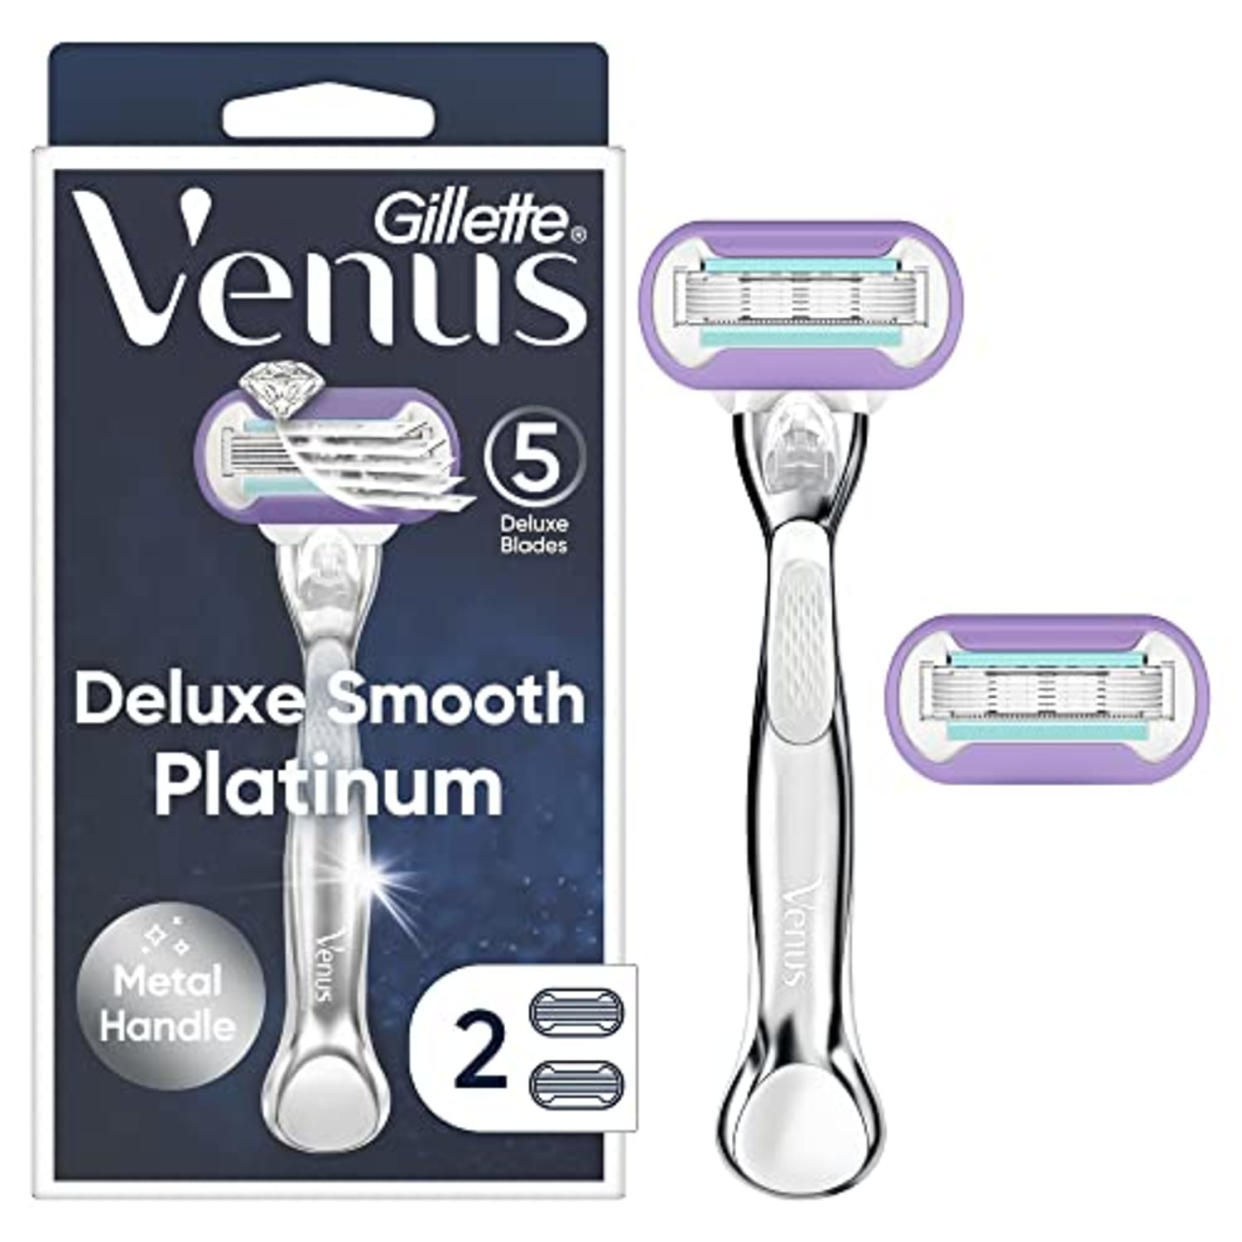 Gillette Venus Deluxe Smooth Platinum Razor (Amazon / Amazon)